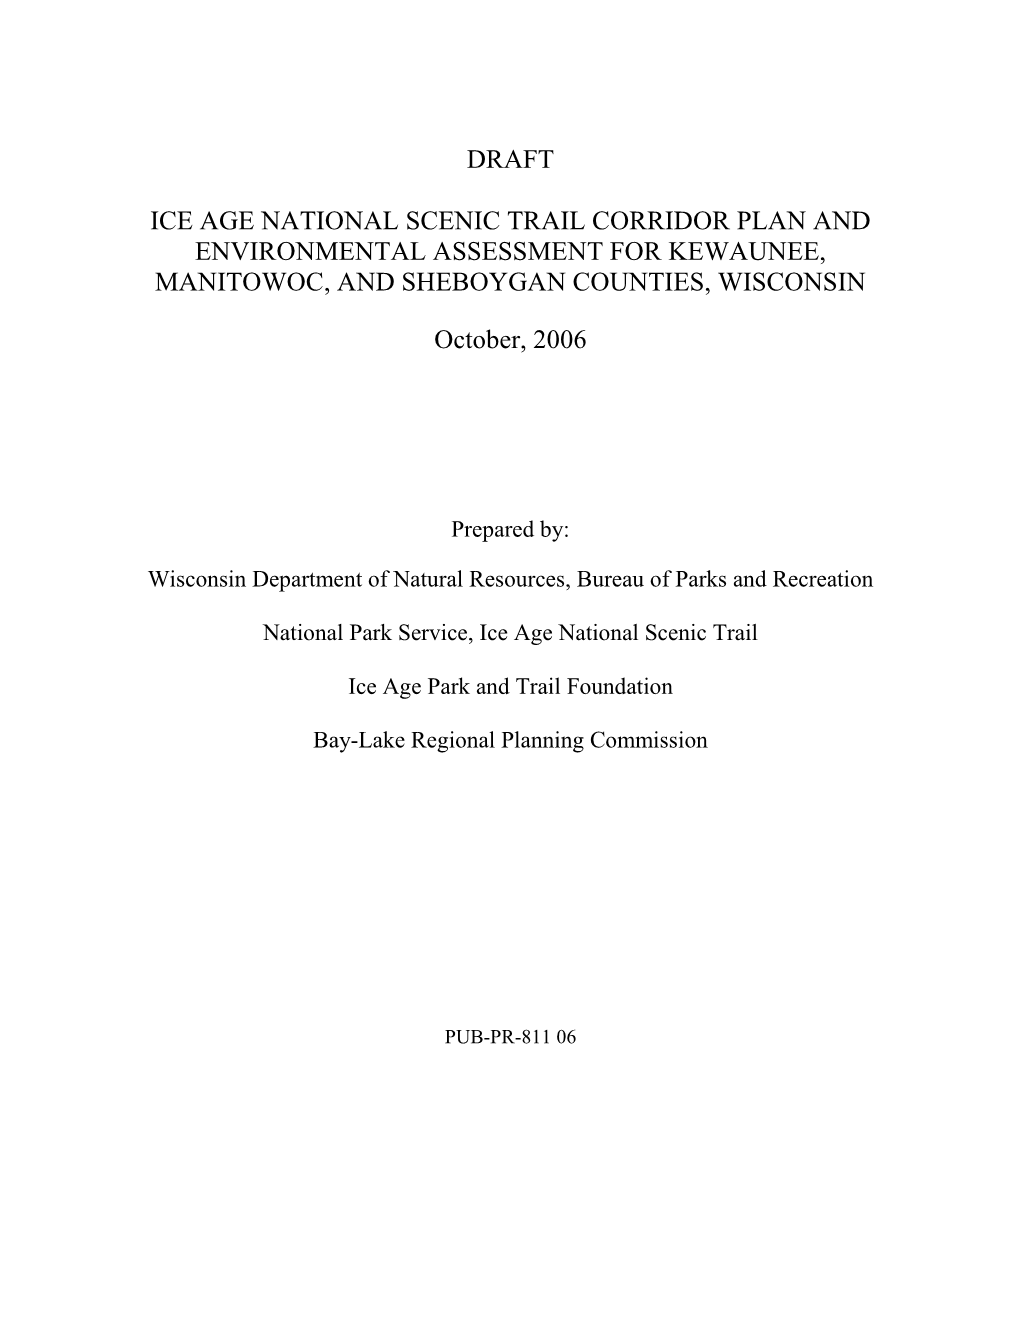 Lake Michigan Ice Age National Scenic Trail Corridor Plan Draft October 2006